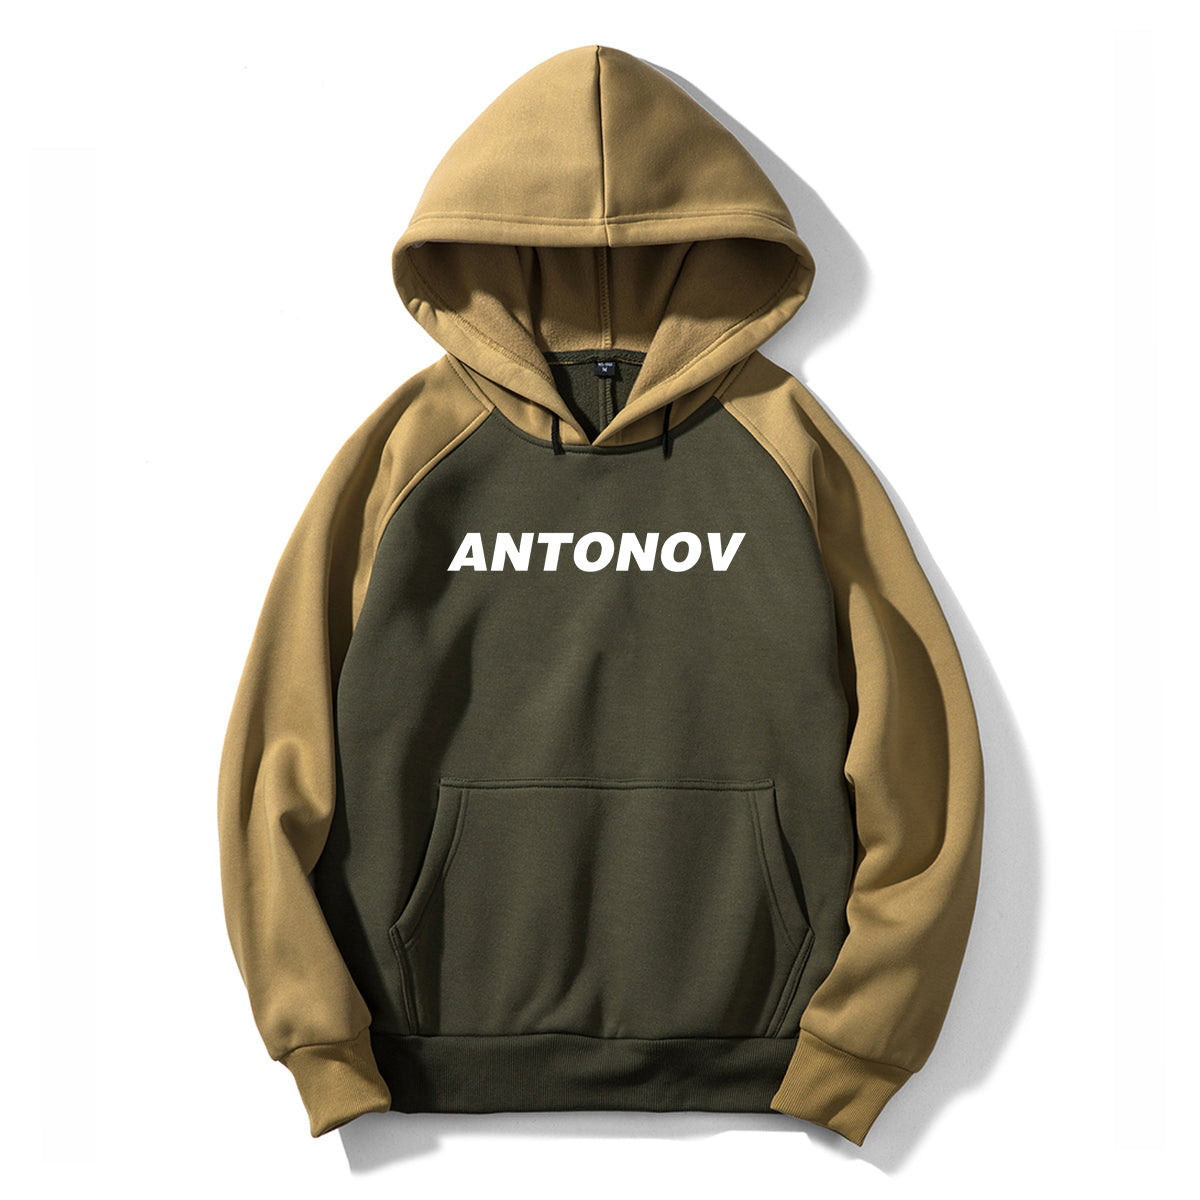 Antonov & Text Designed Colourful Hoodies